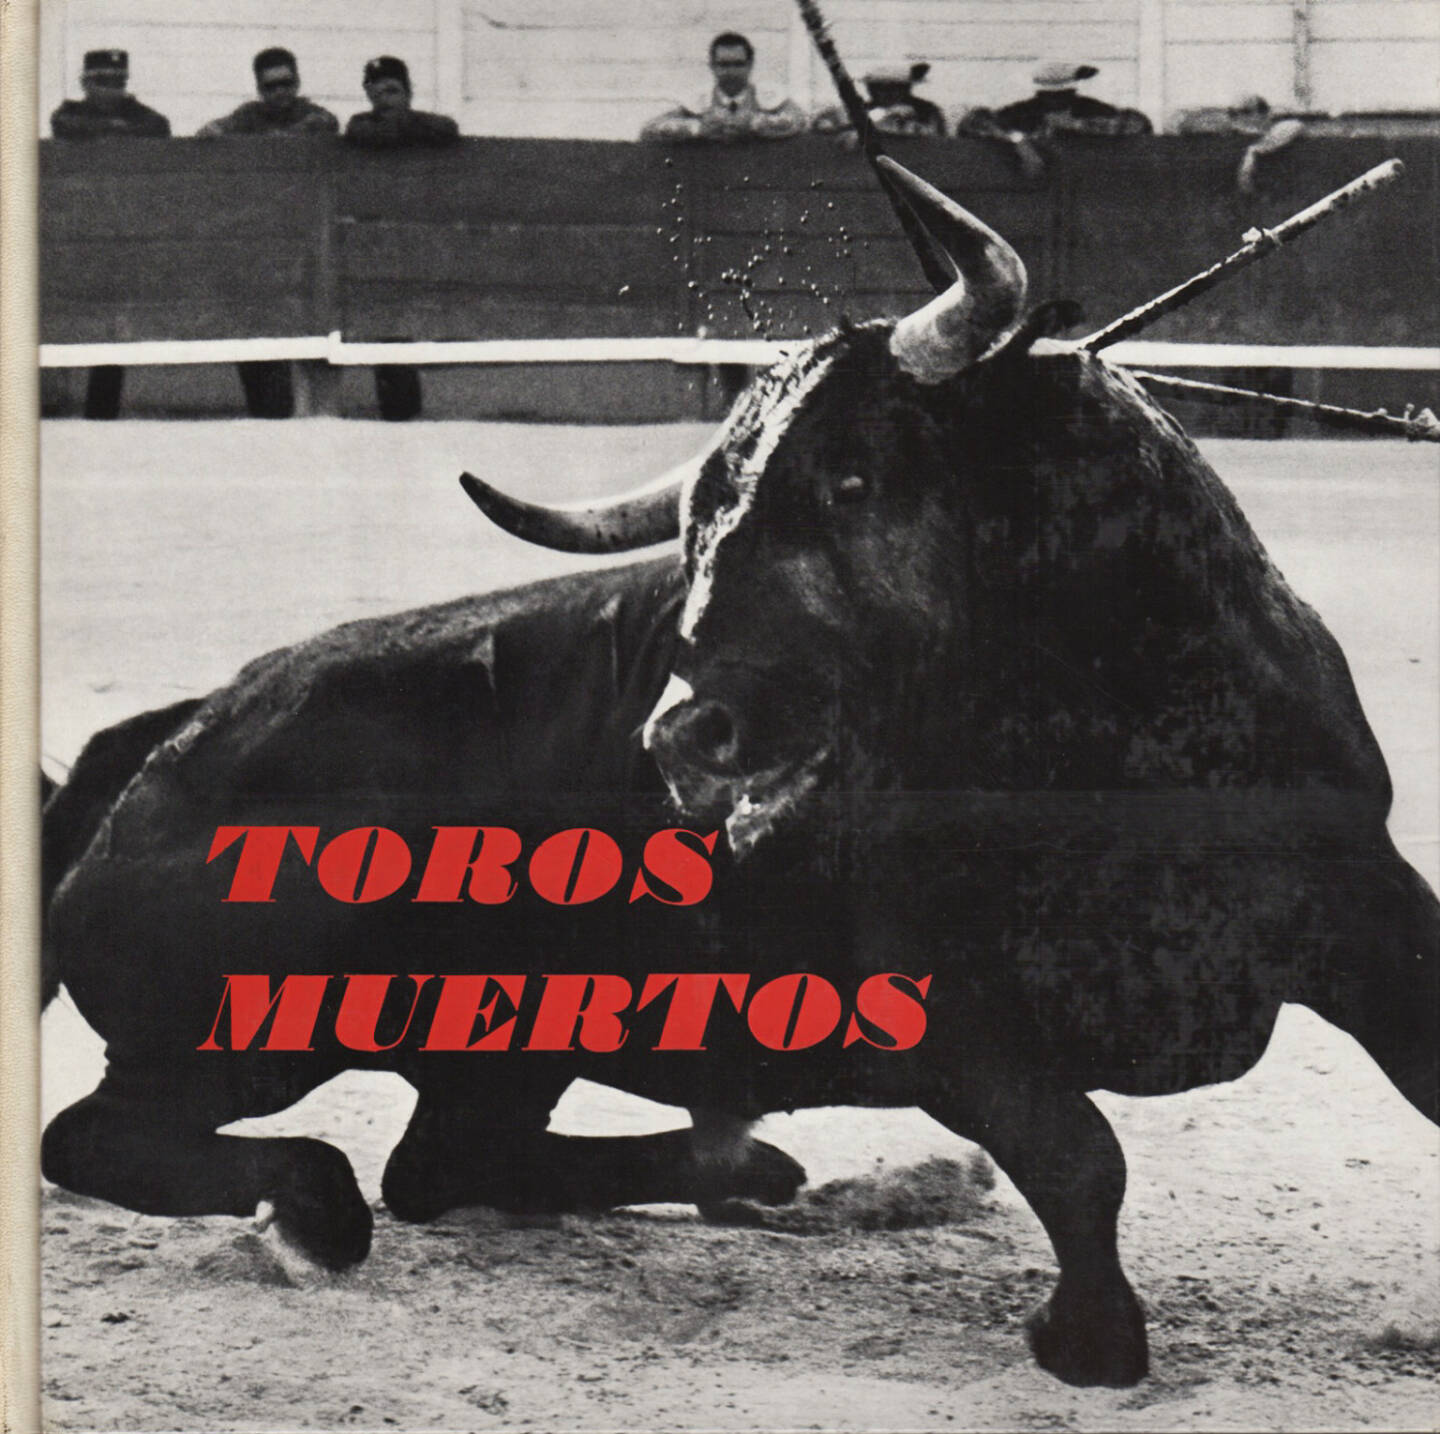 Lucien Clergue - Toros muertos, 400-550 Euro, http://josefchladek.com/book/lucien_clergue_-_toros_muertos